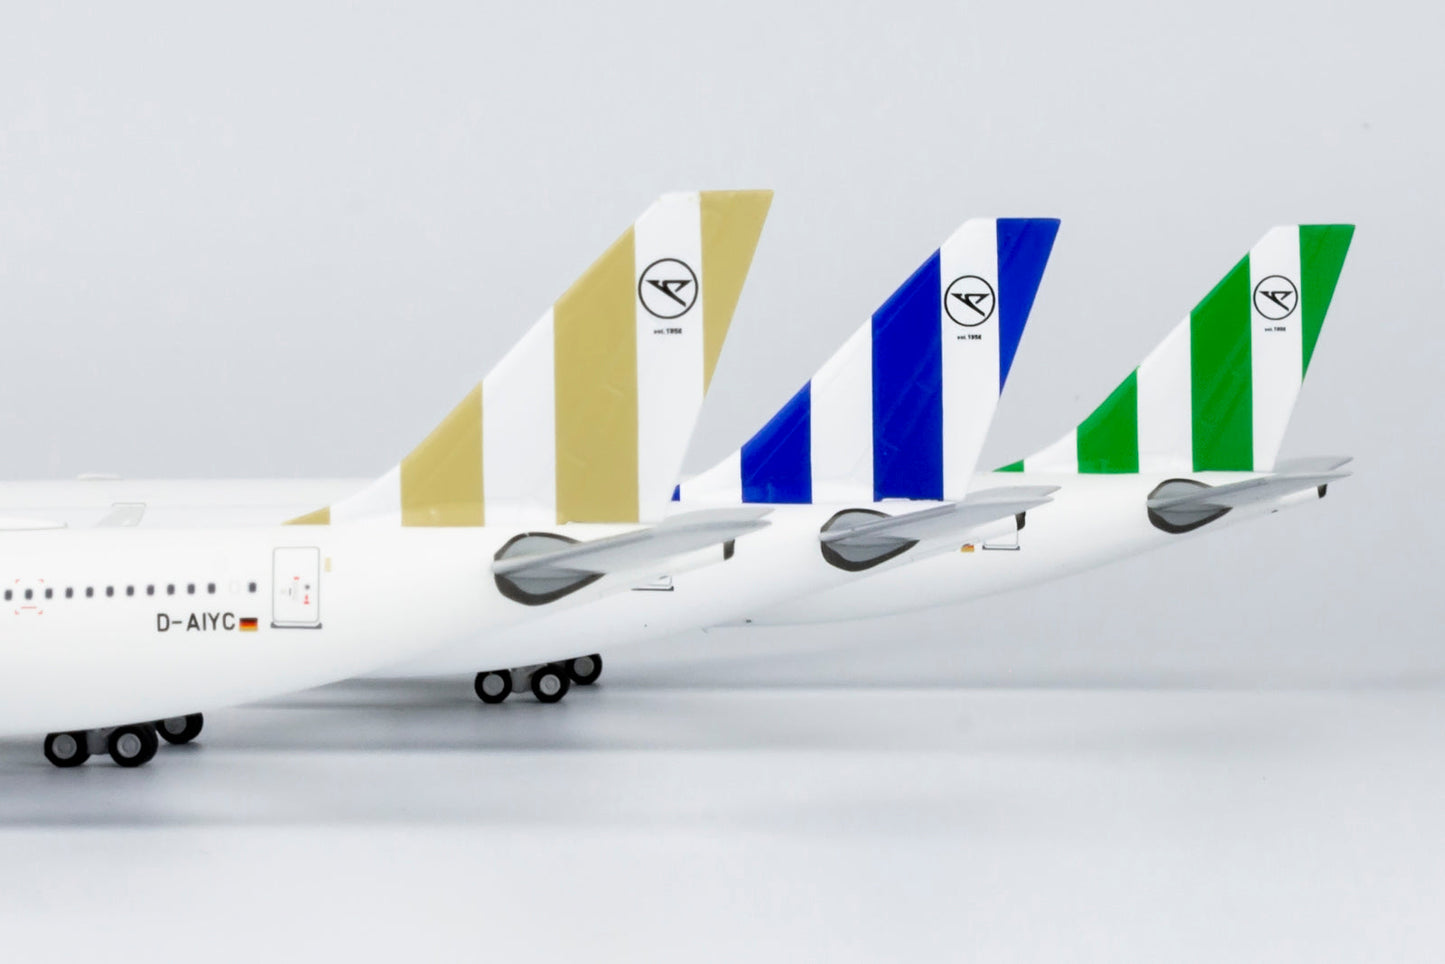 1/400 Condor A330-200 "Beige Tail" NG Models 61055